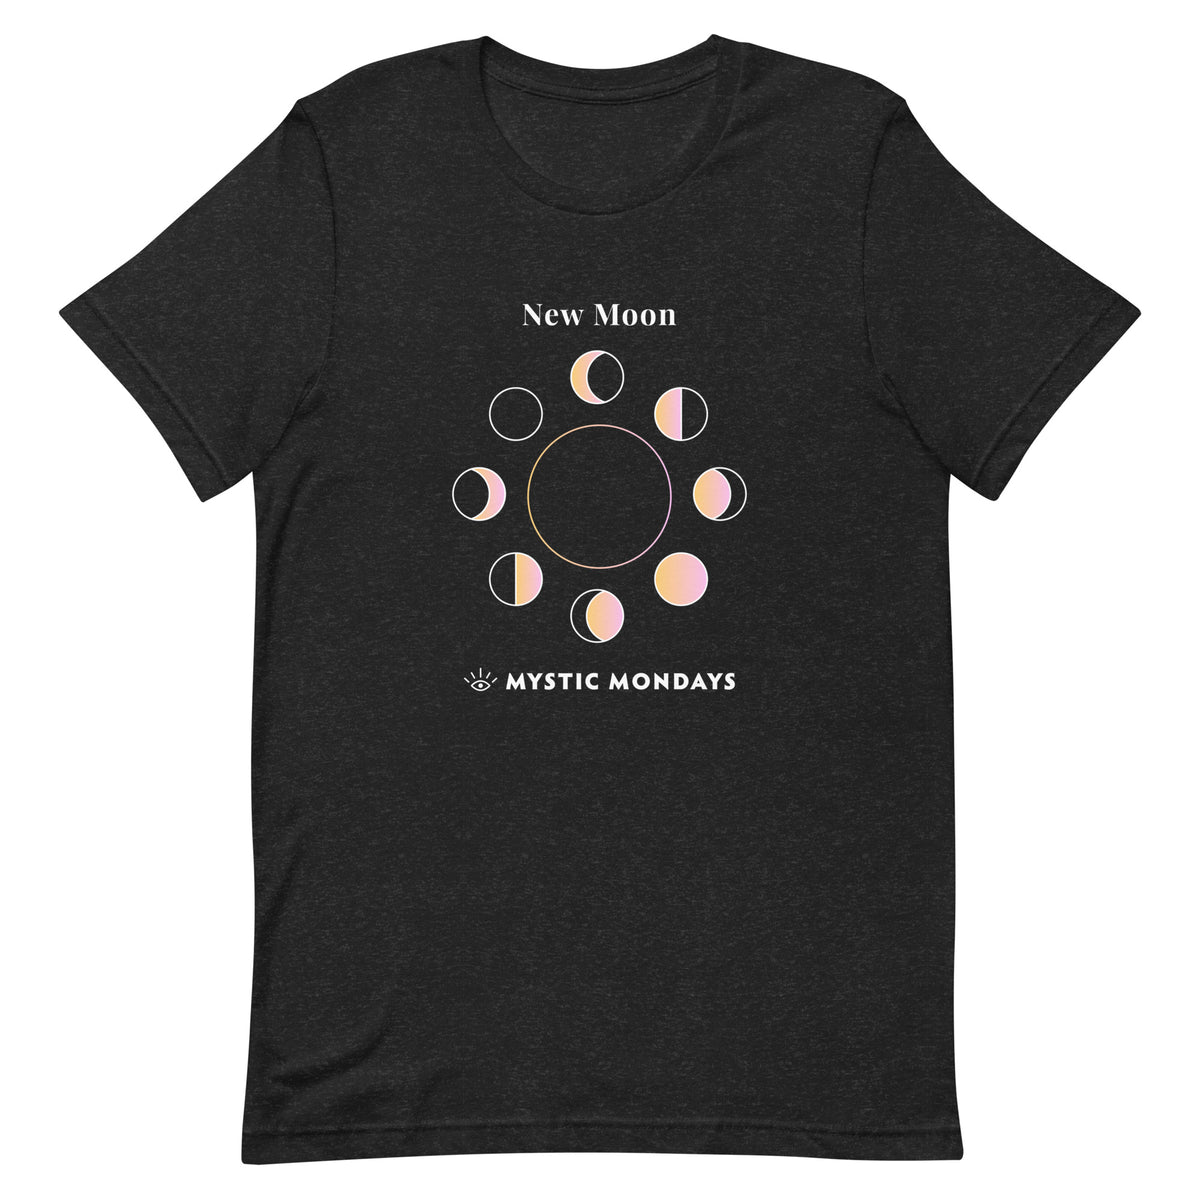 New Moon T-shirt